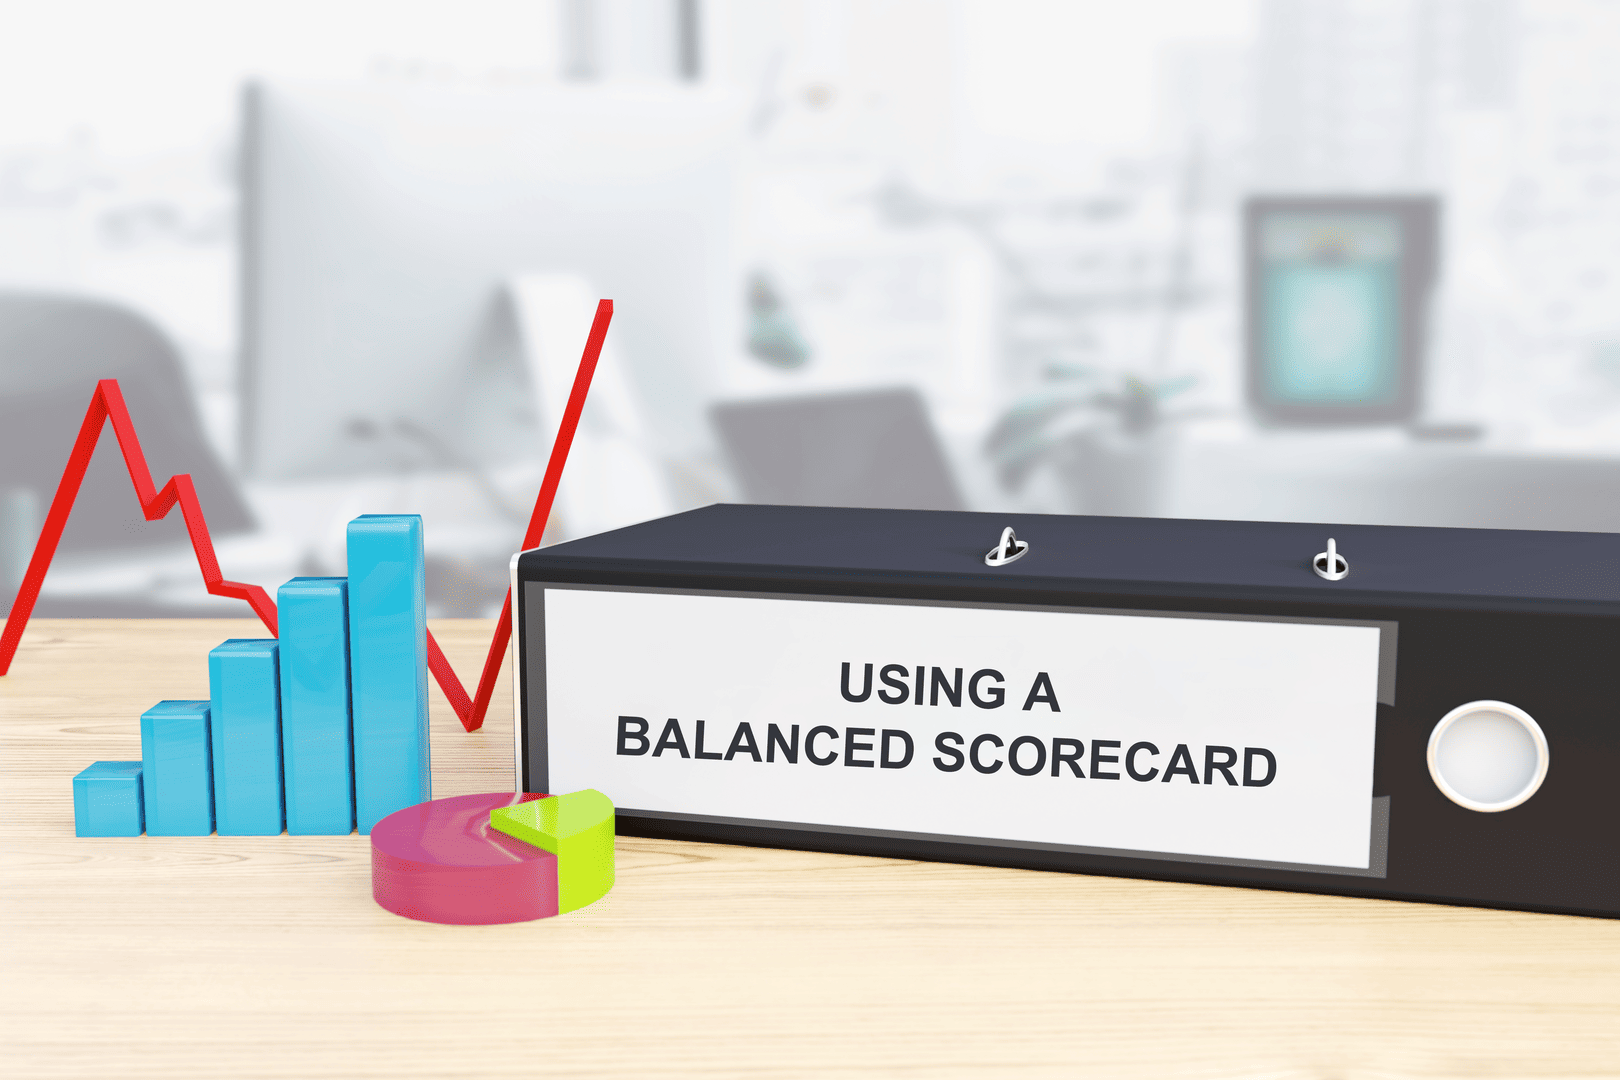 Using a Balanced Scorecard for Performance Management